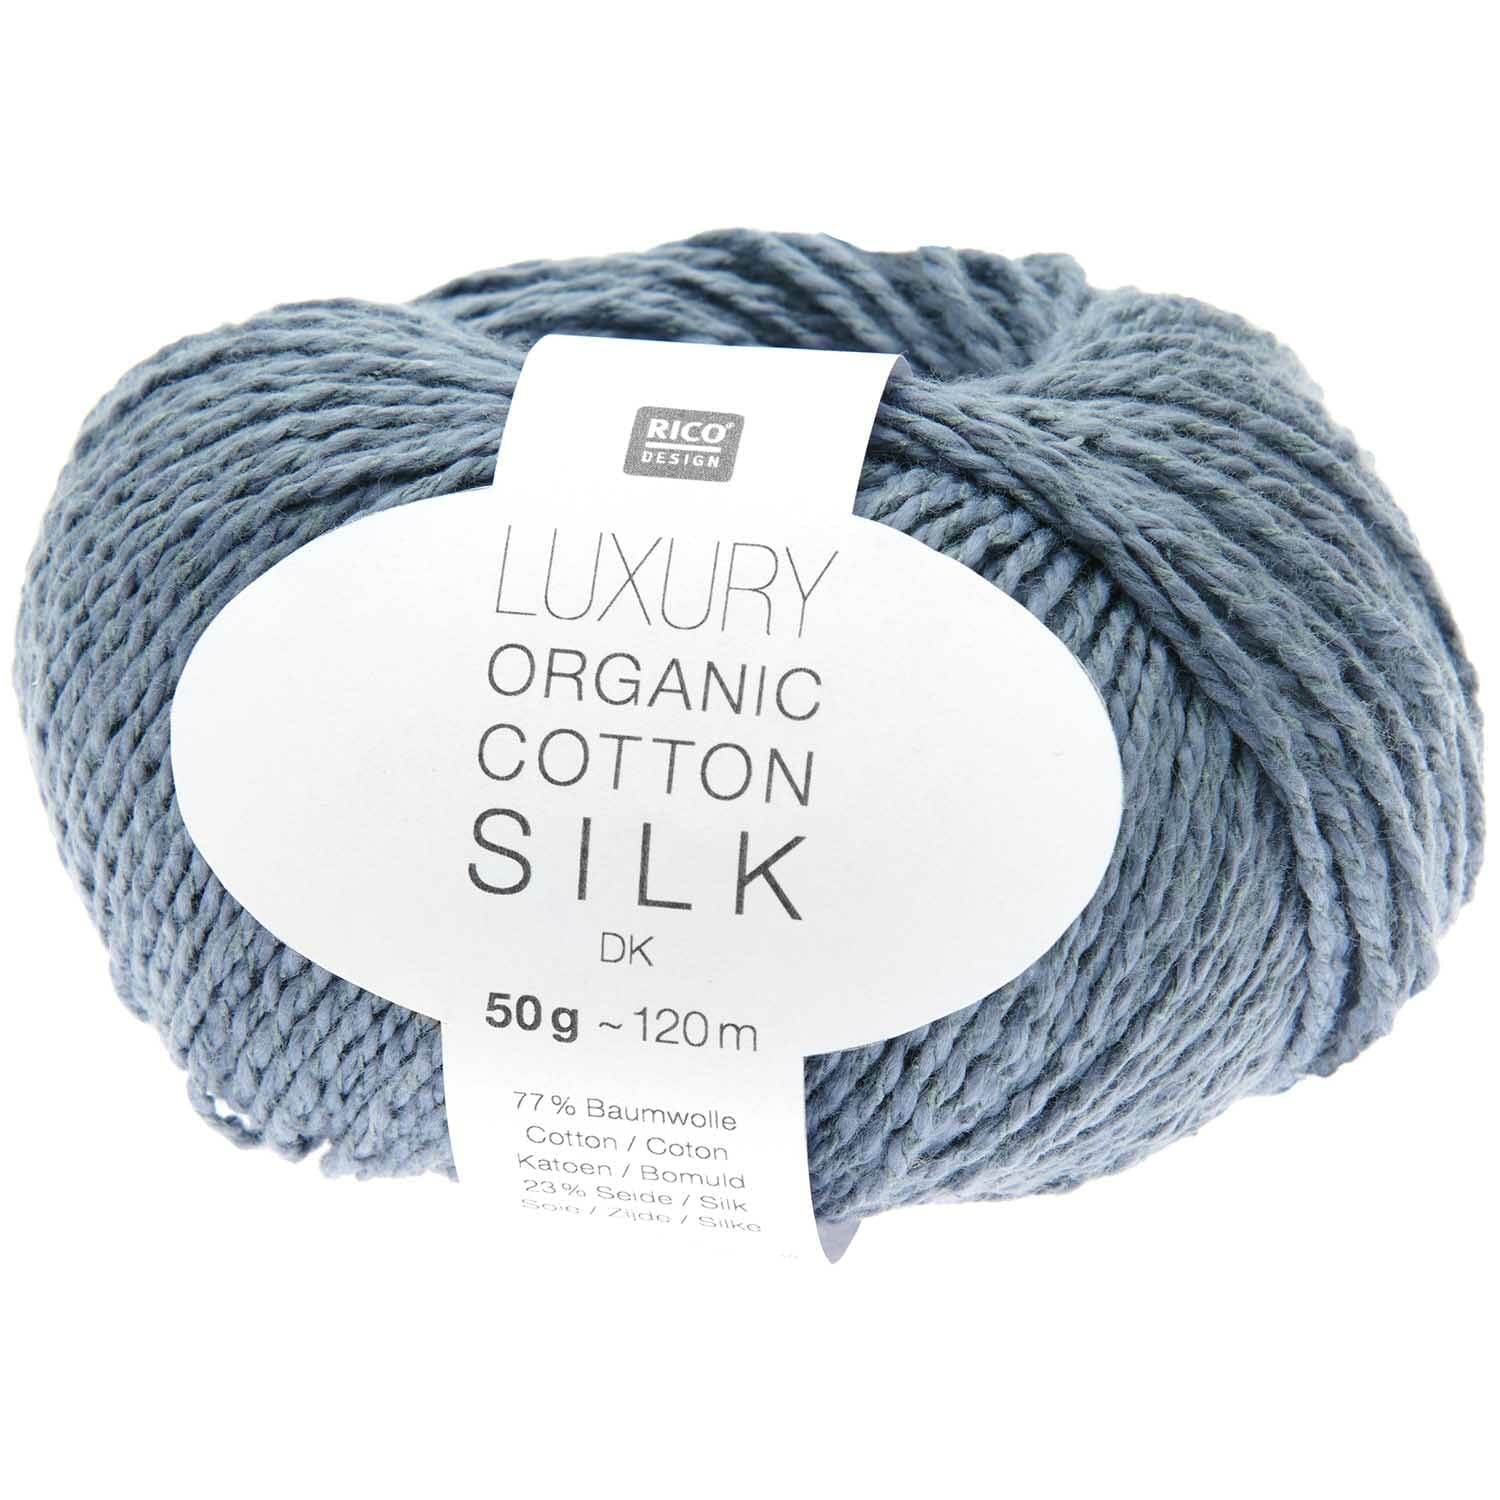 Rico Luxury Organic Cotton Silk dk 50g